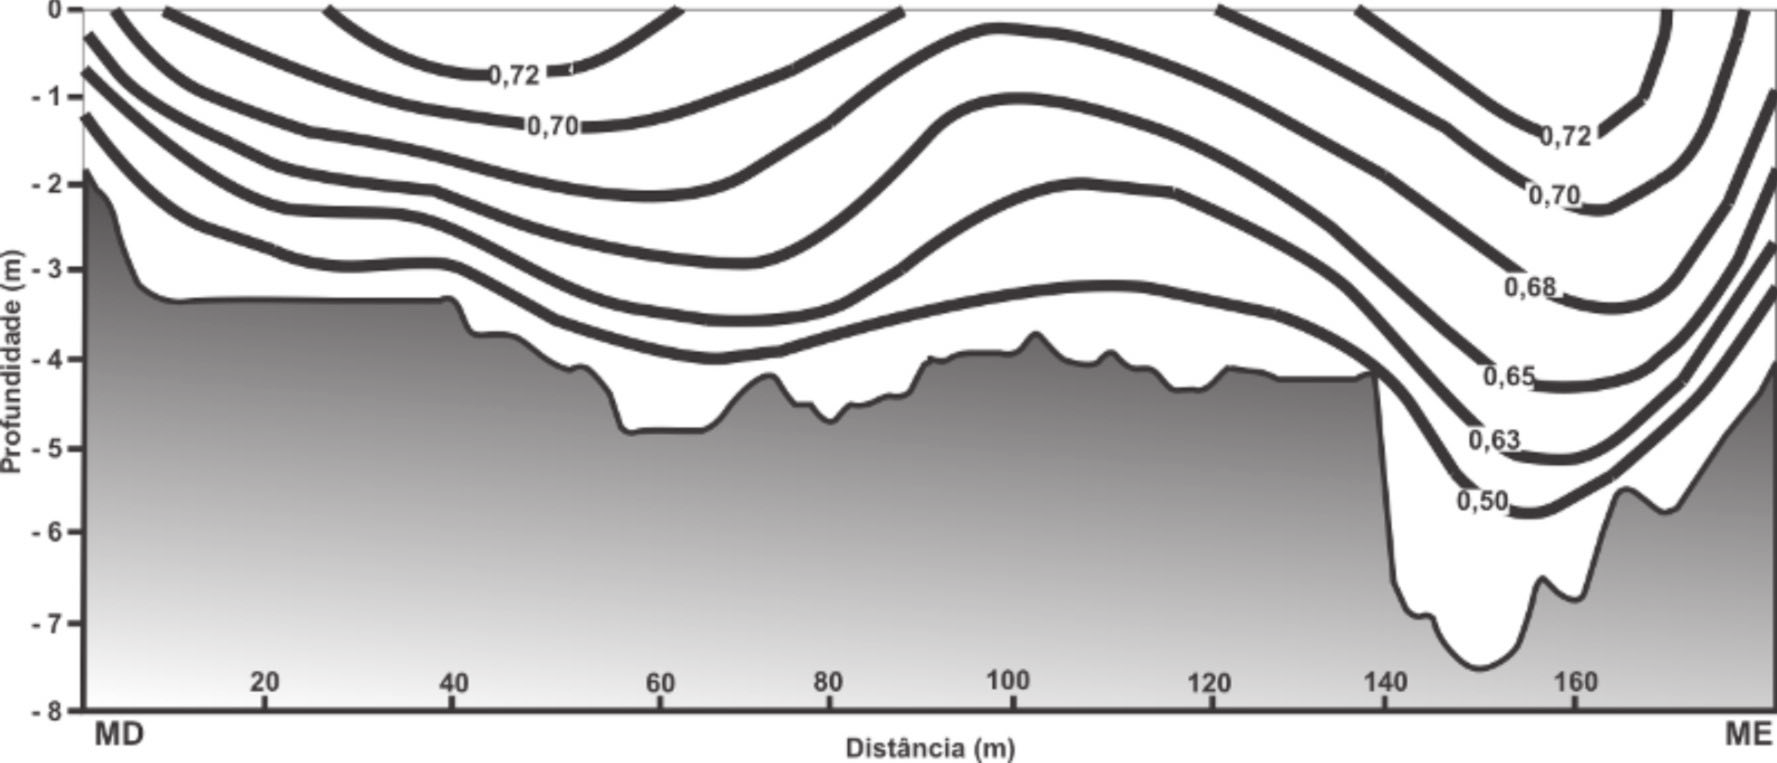 FIGURA 5. Características granulométricas dos sedimentos de leito amostrados nas seções estudadas do baixo curso do rio Ivaí.